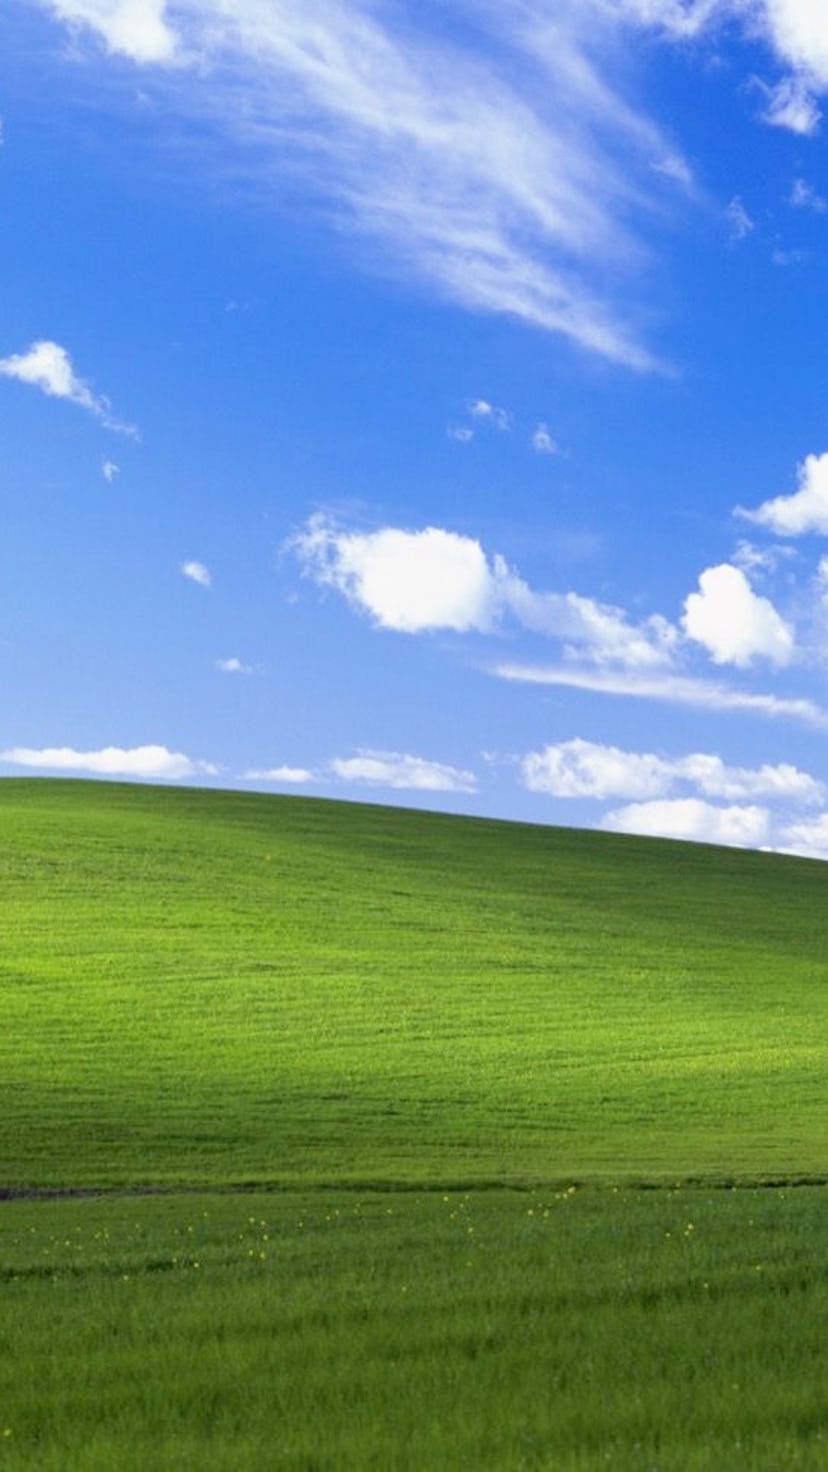 Microsoft's famous Windows XP background wallpaper.